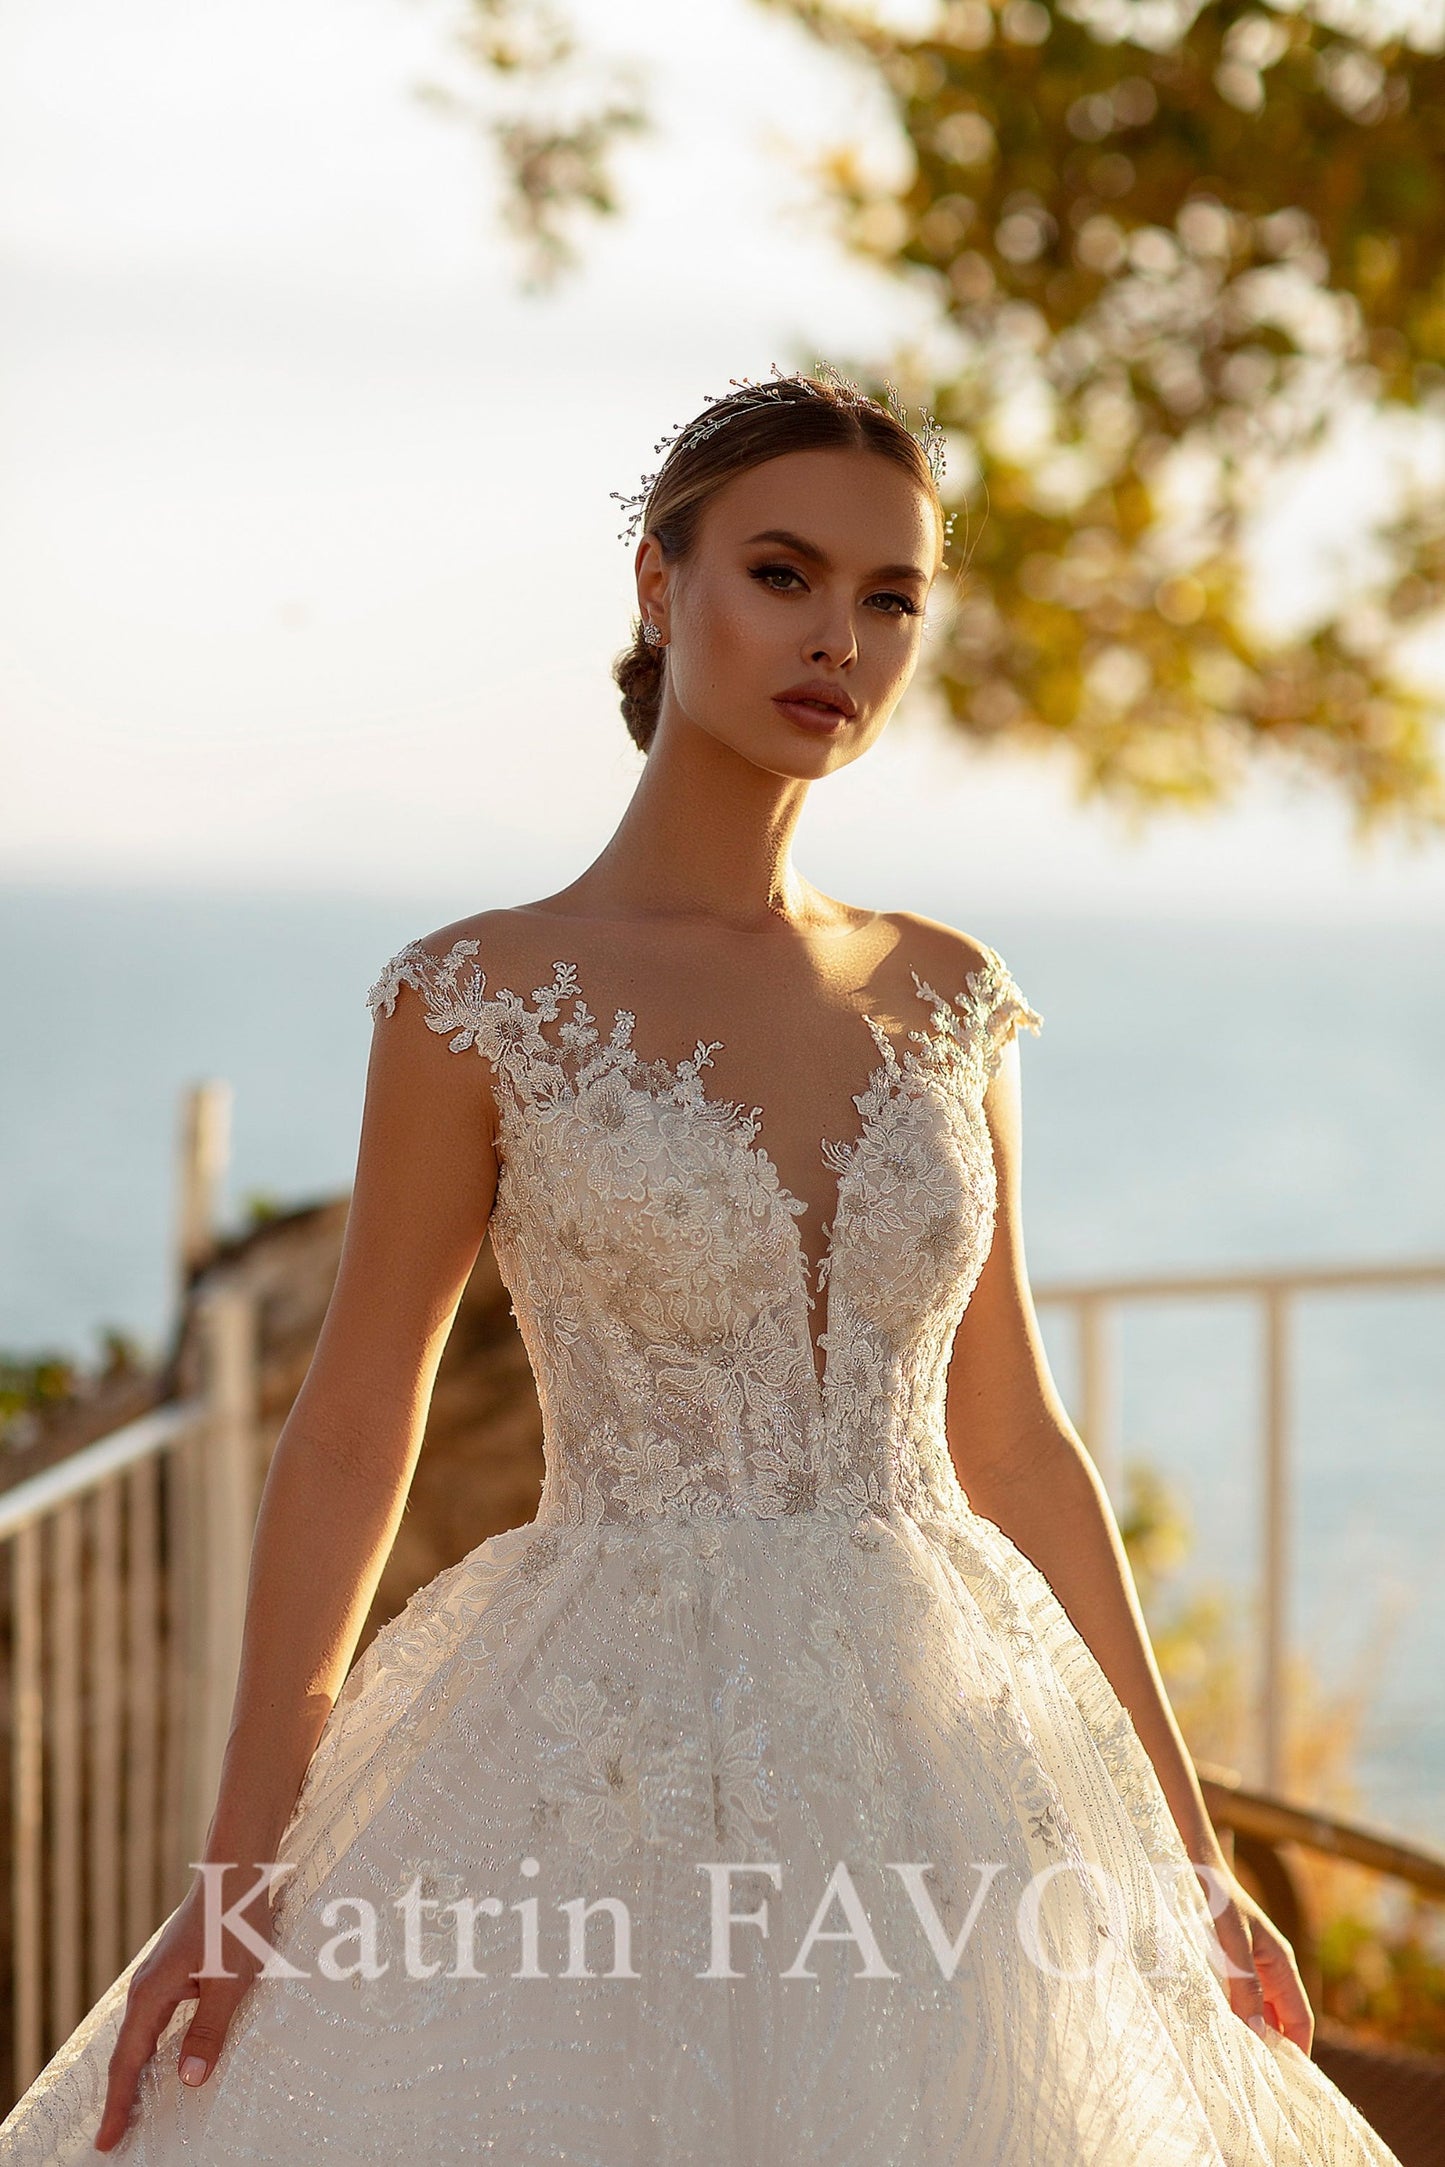 KatrinFAVORboutique-Embroidered ballgown sparkle wedding dress